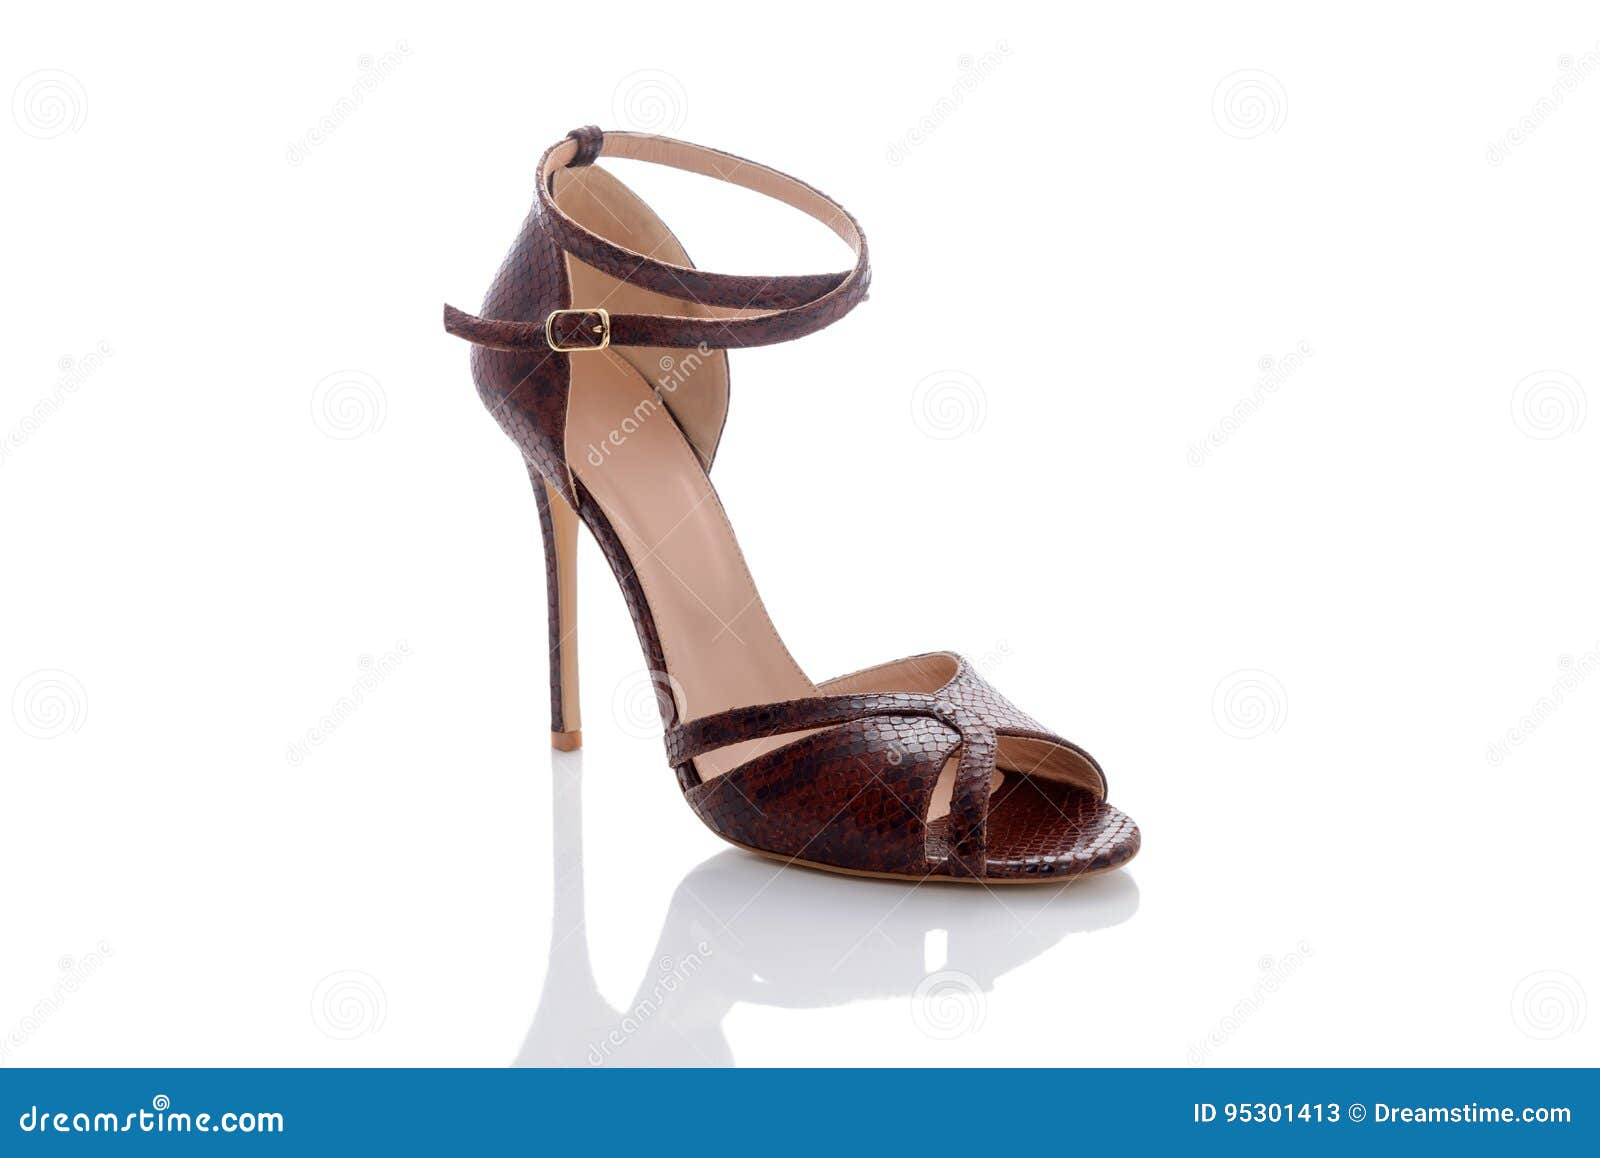 Burgundy color sandals stock image. Image of footstep - 95301413